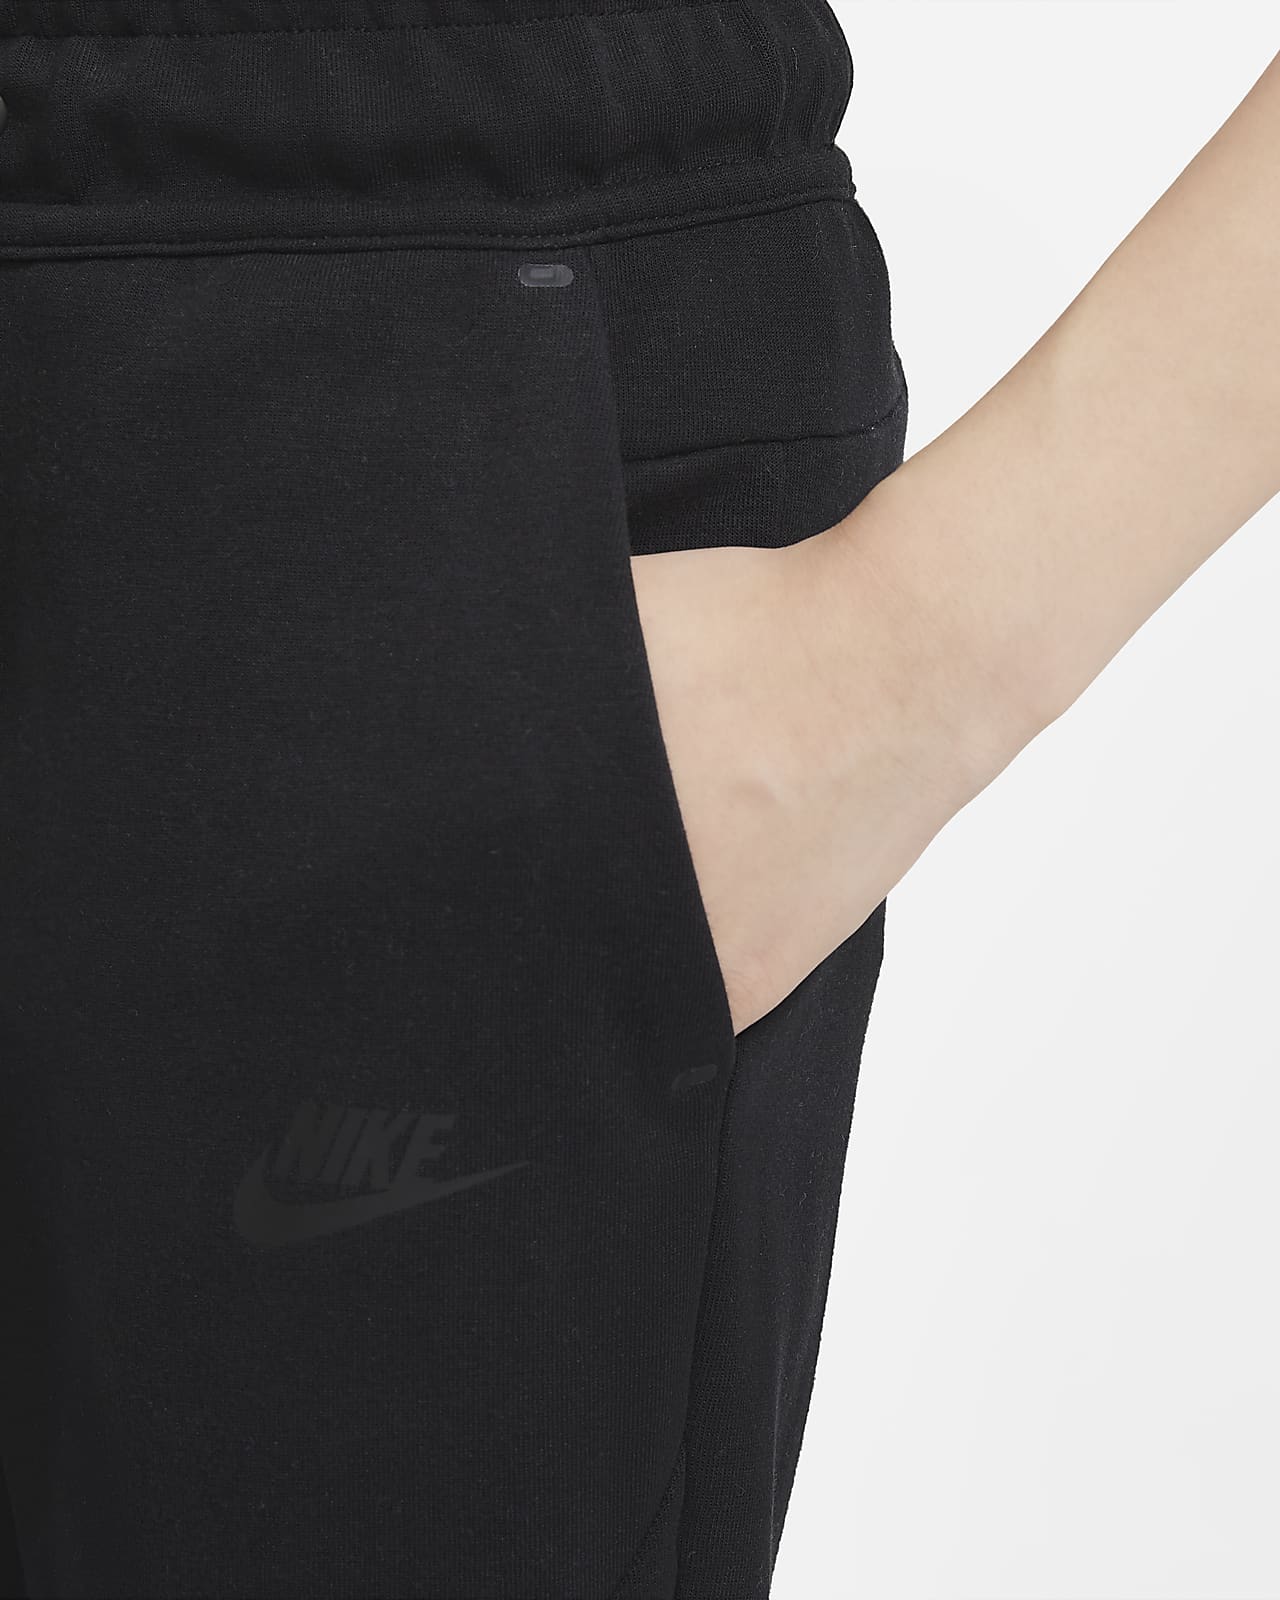 Nike tech flee pants : r/Nike